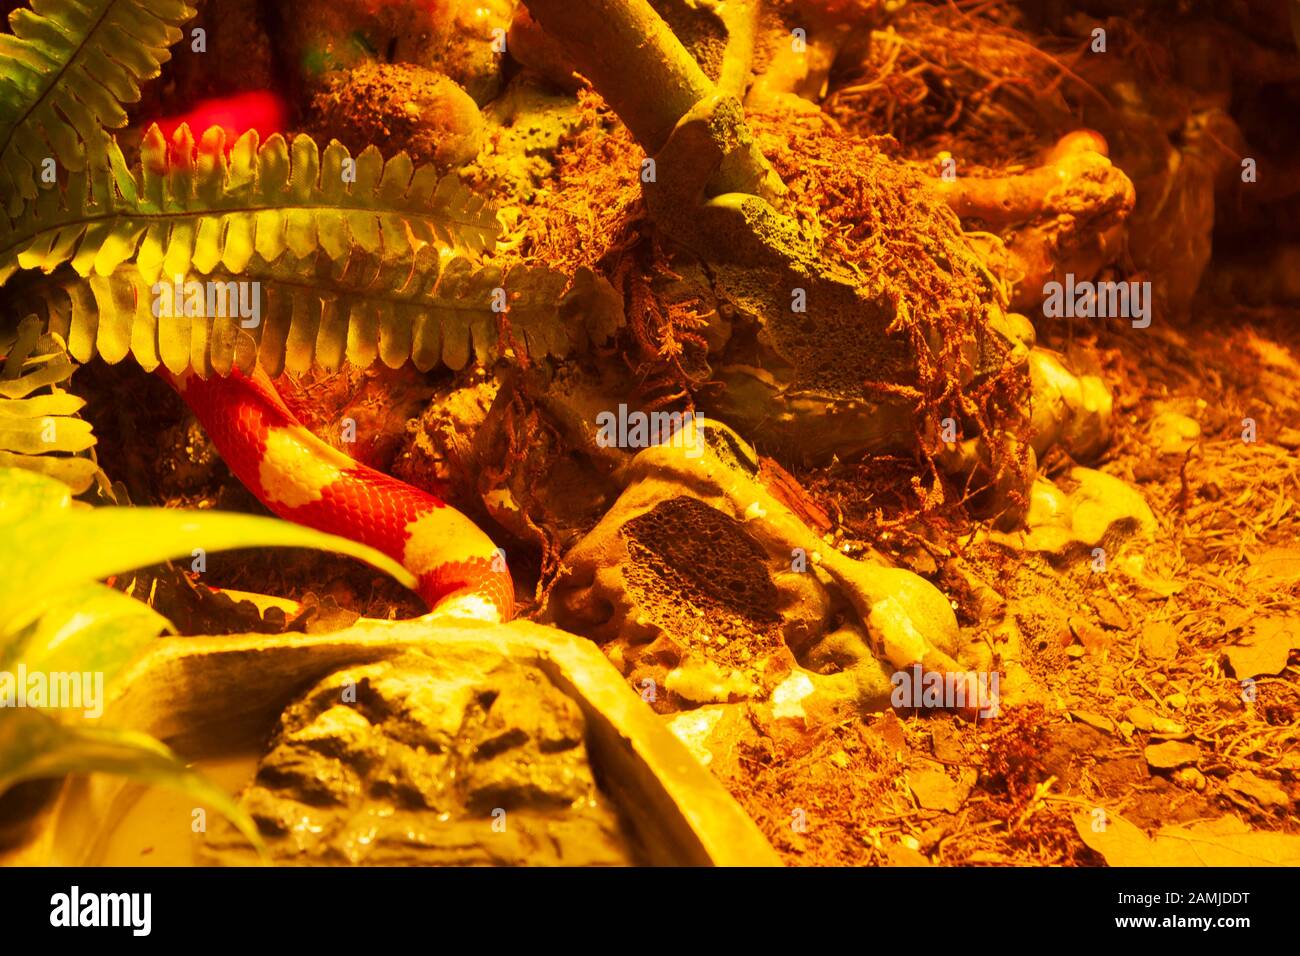 False coral hidden between the malesa Stock Photo